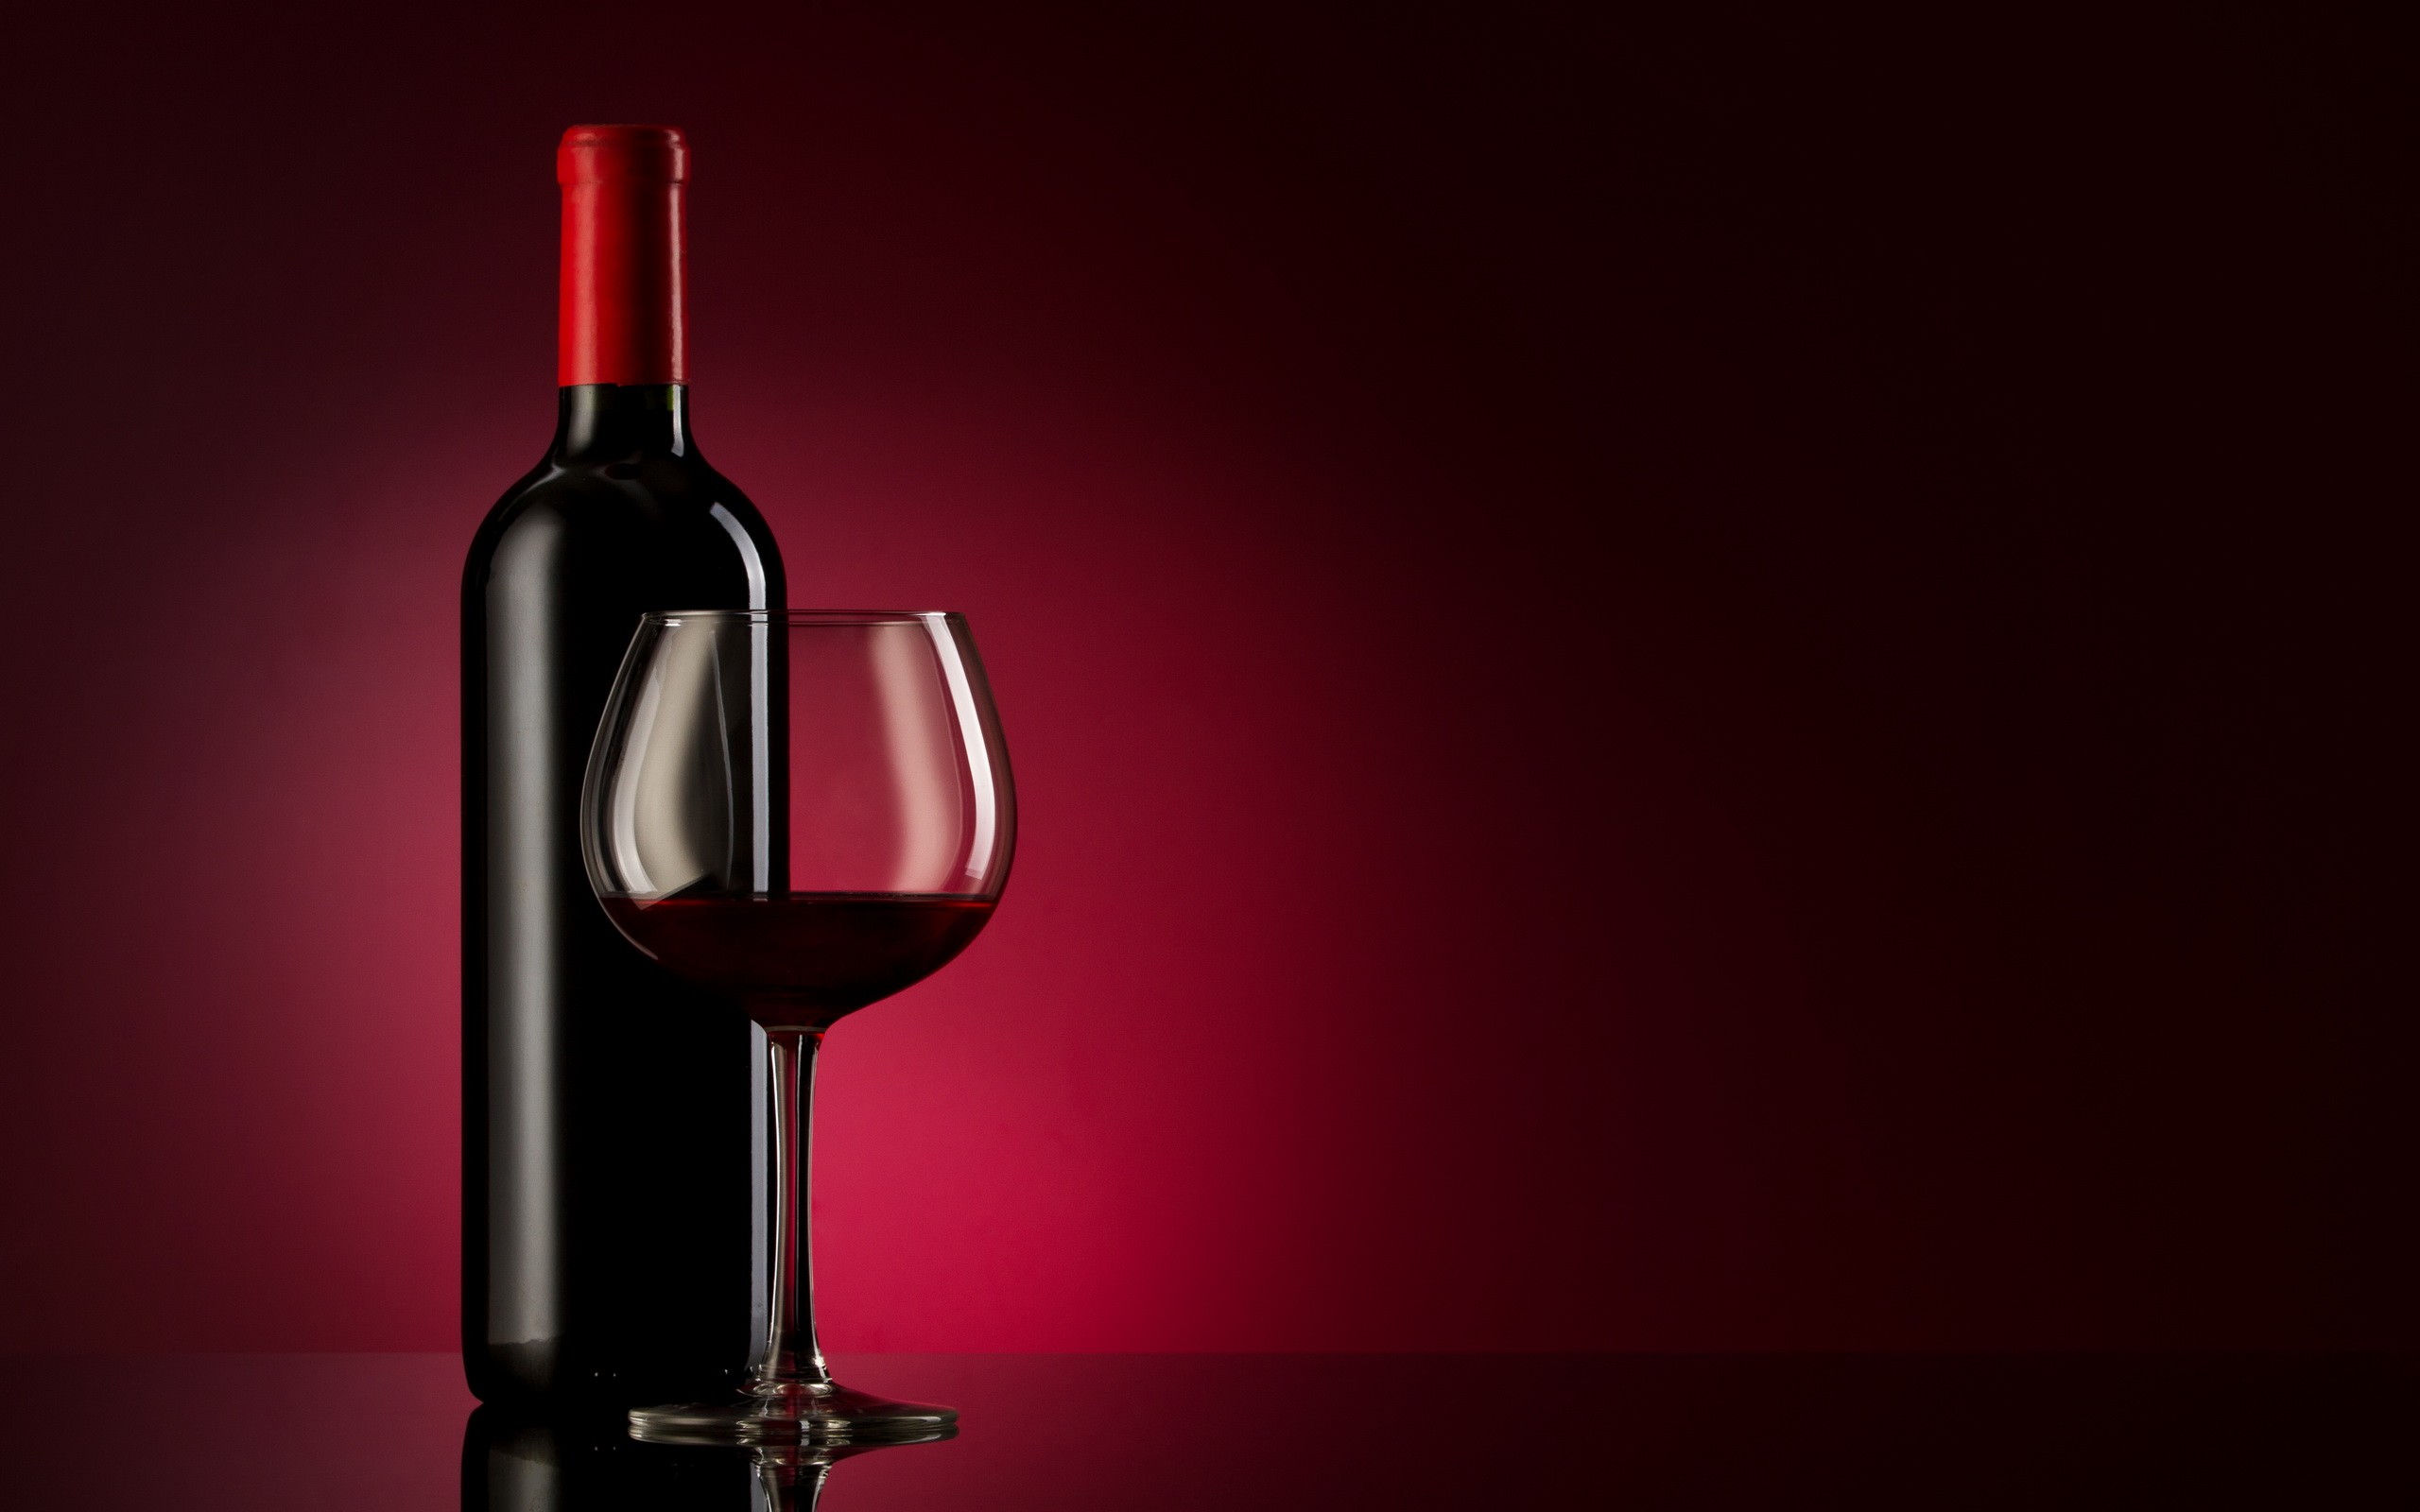 wine wallpaper for mobile,bottle,wine bottle,wine glass,red wine,glass bottle